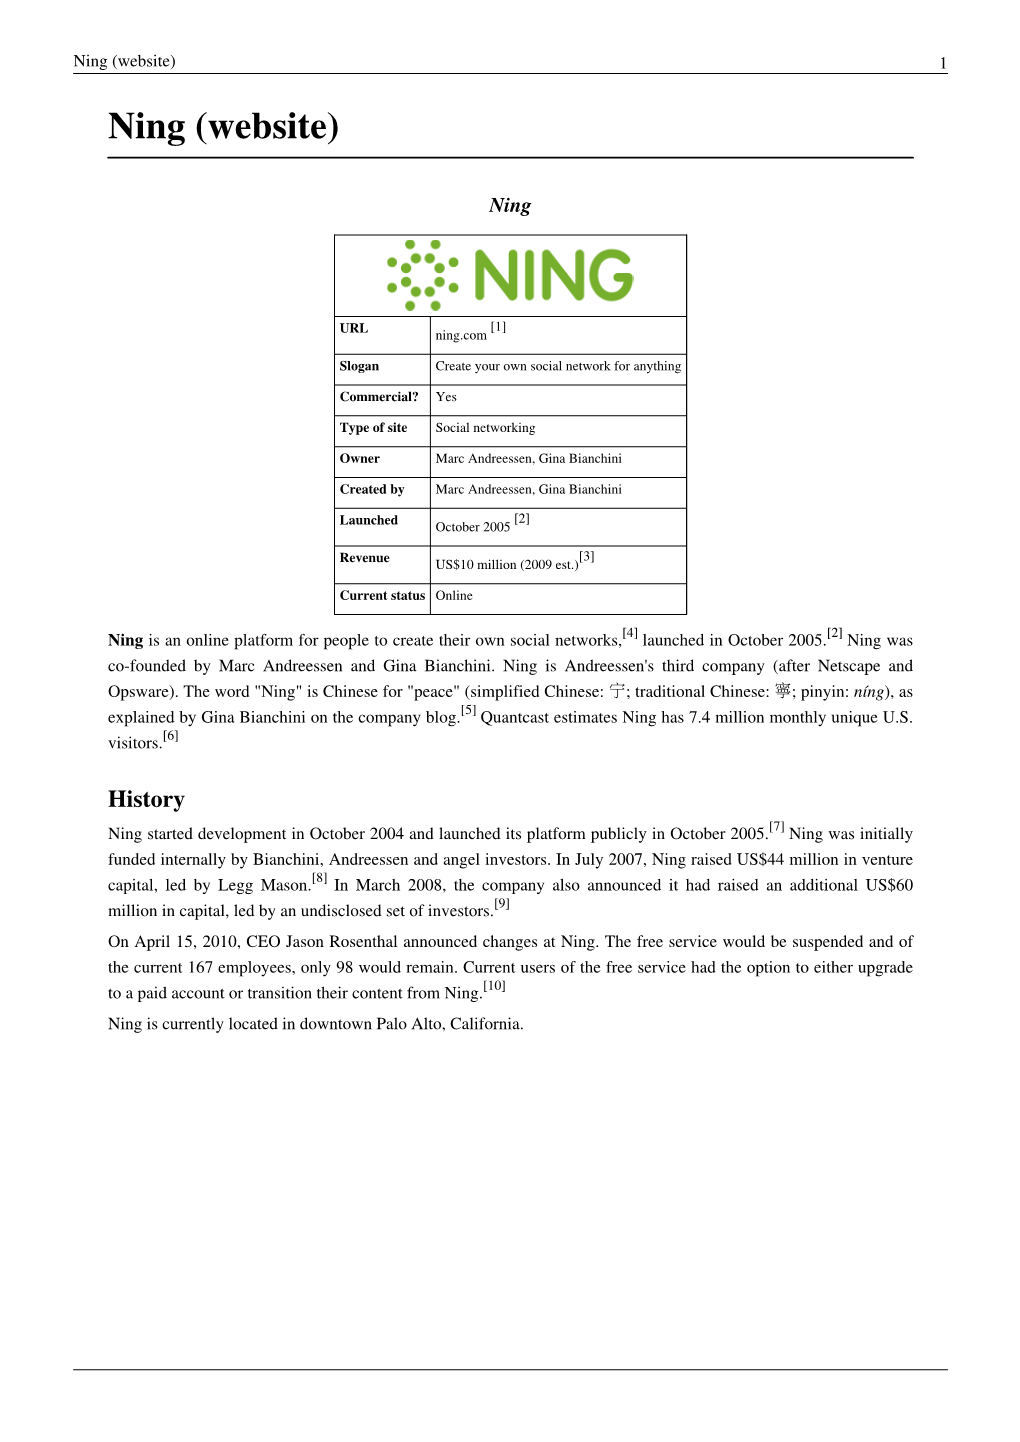 Ning (Website) 1 Ning (Website)